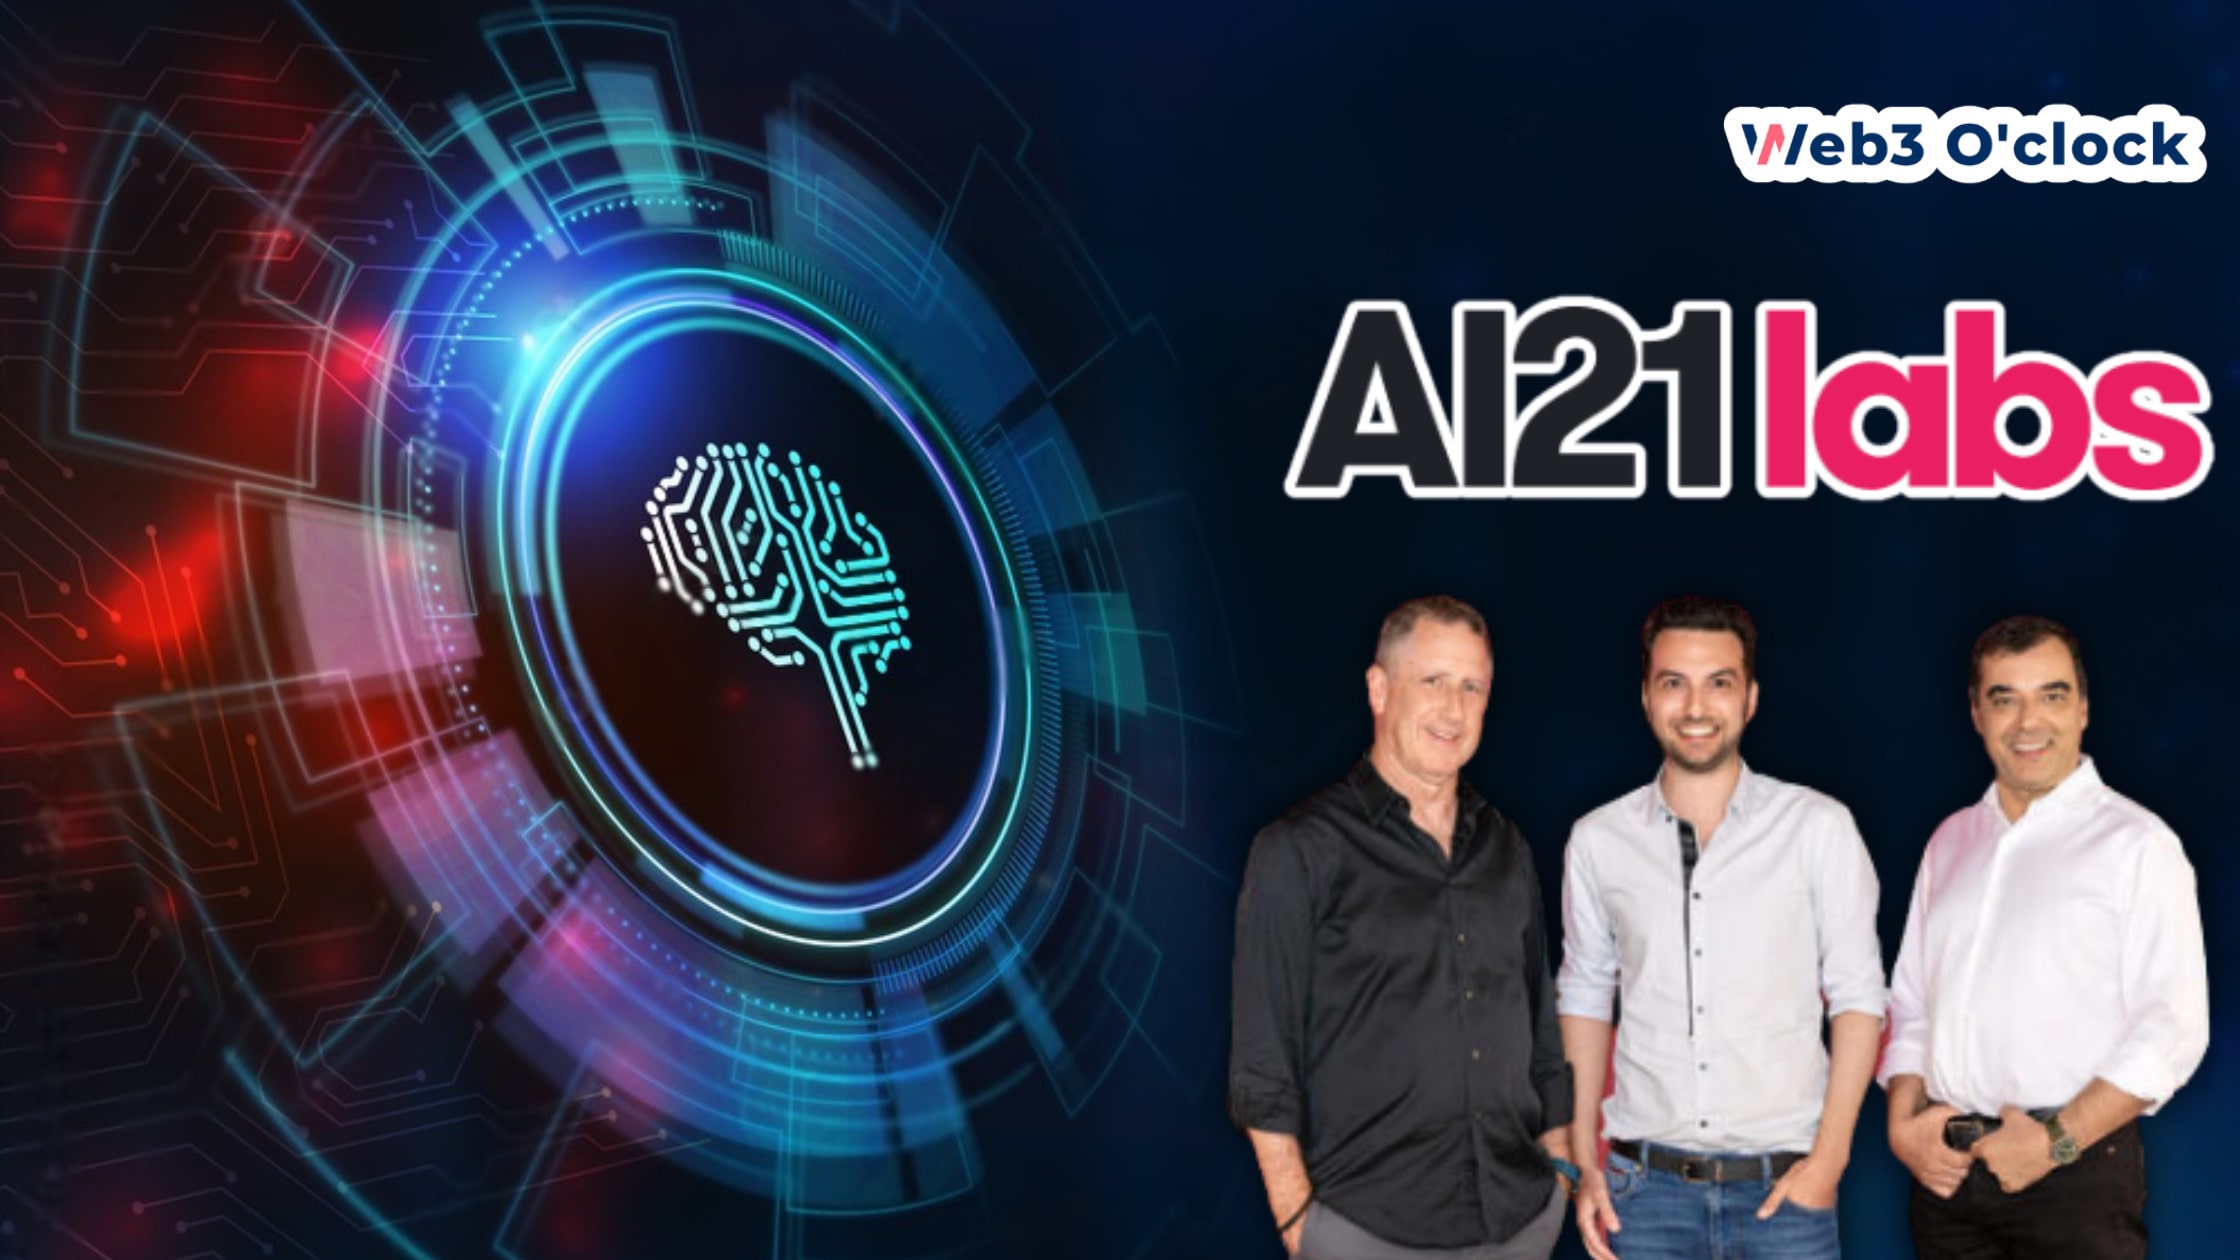 AI21 Labs Raises $155M by web3oclock